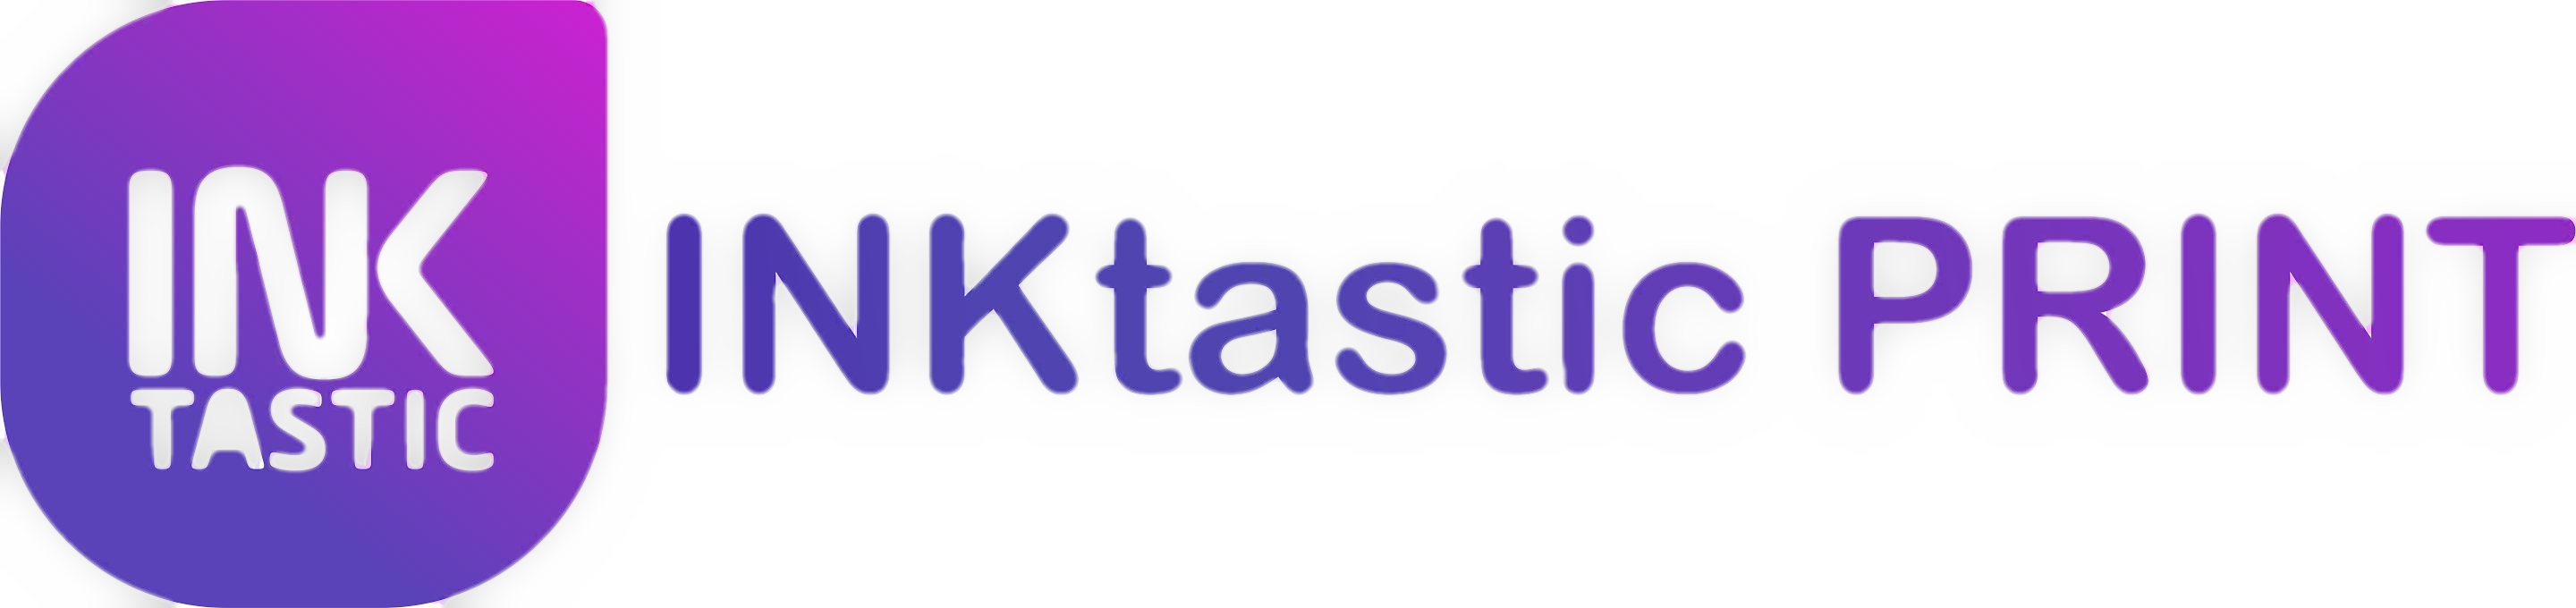 INKtastic PRINT Logo